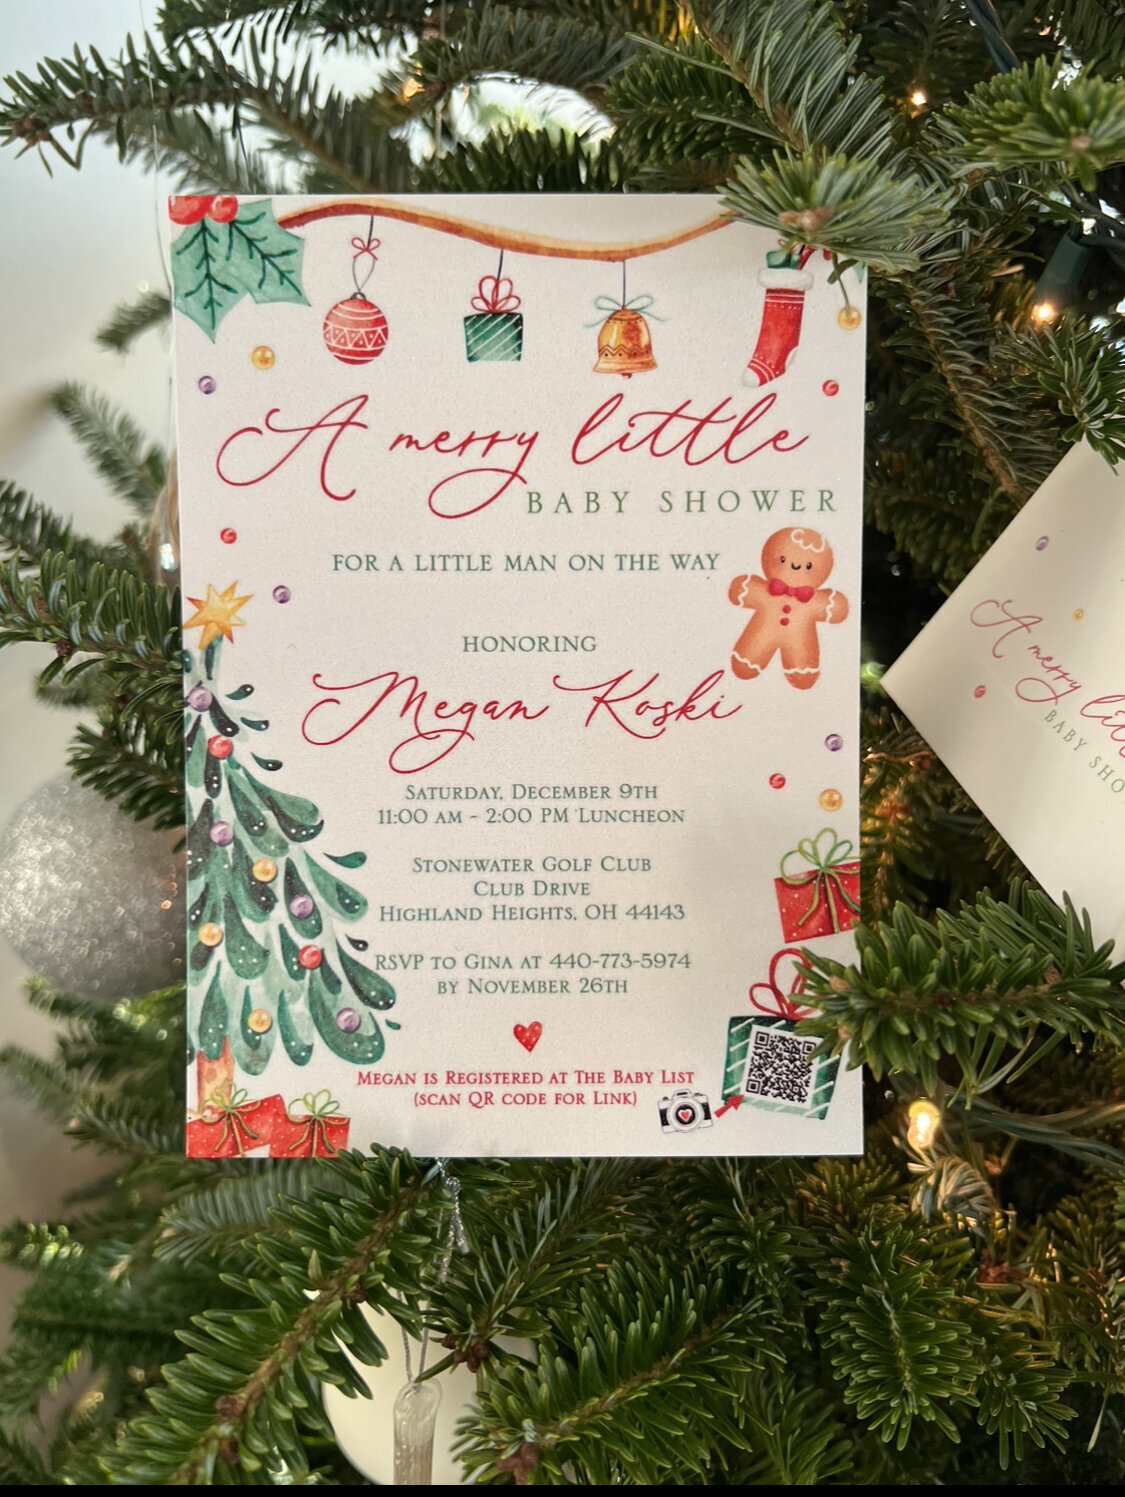 Jane Osler Creative a merry little baby shower invitation